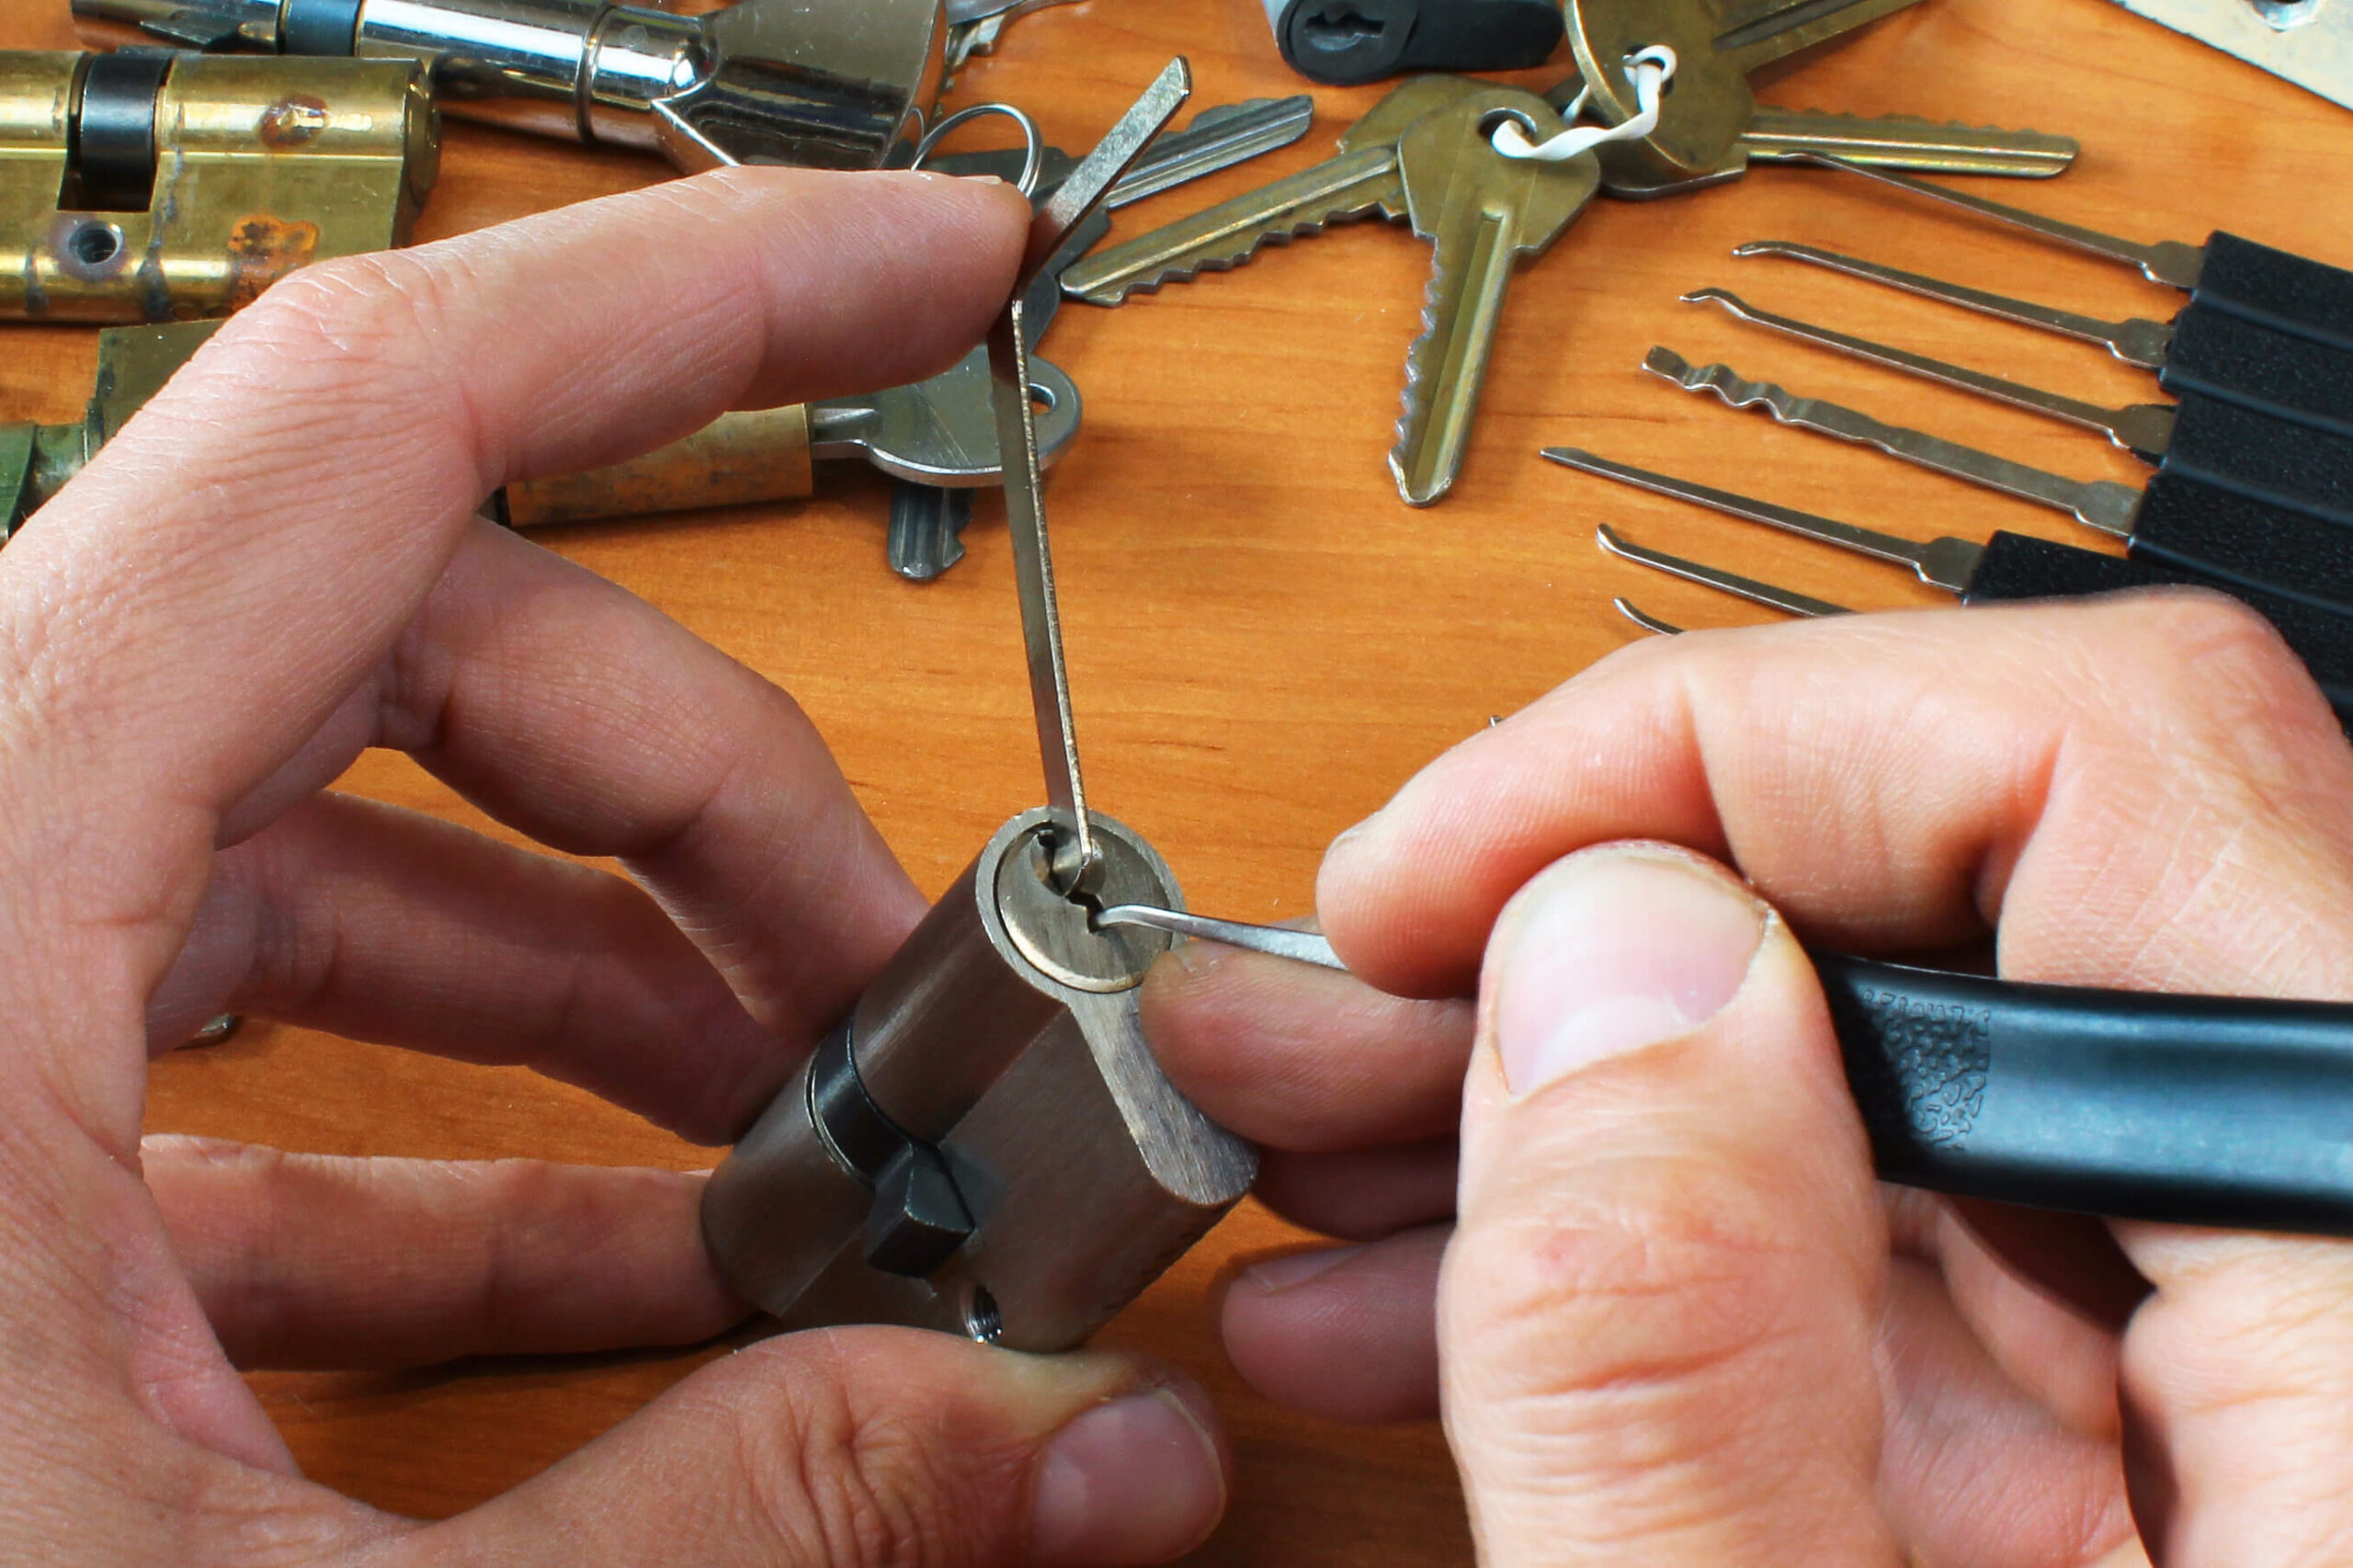 Hands using lockpicks on a lock, tools in background.